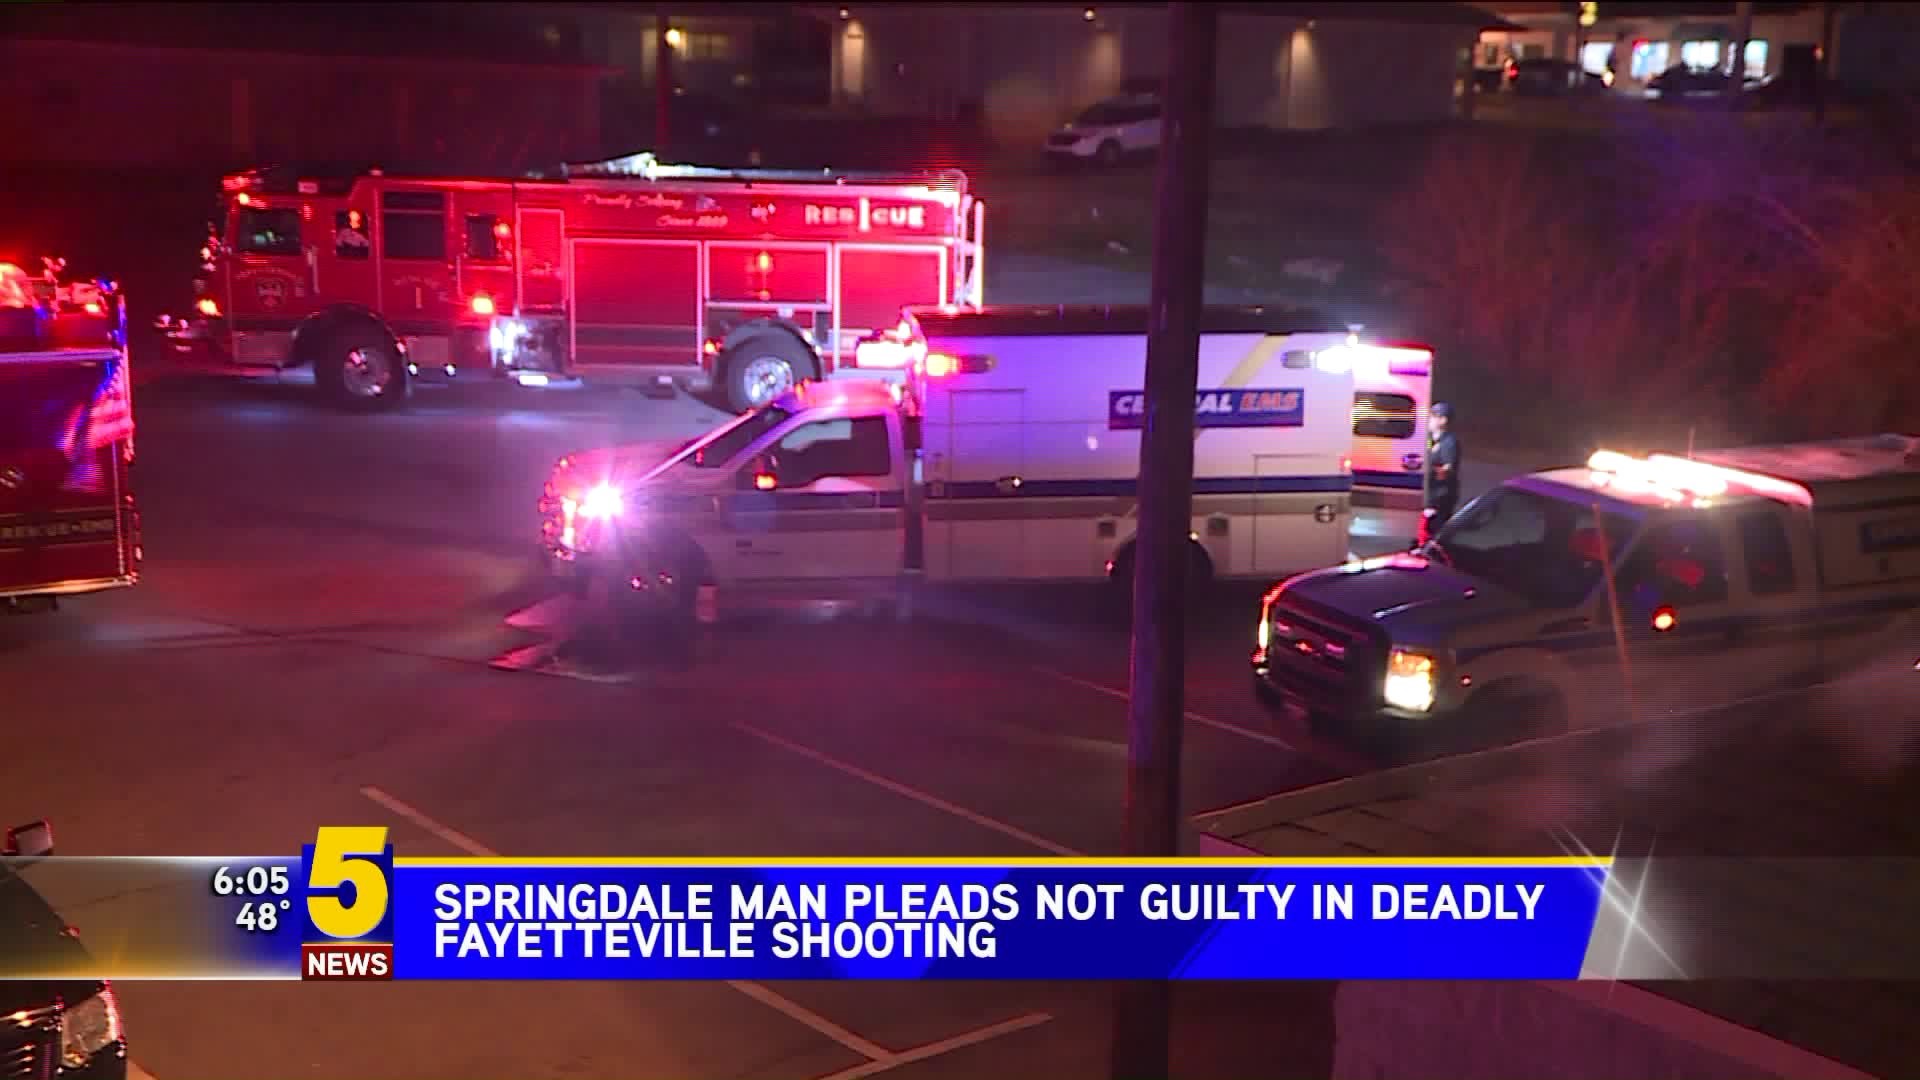 Springdale Man Pleads Not Guilty In Deadly Shooting